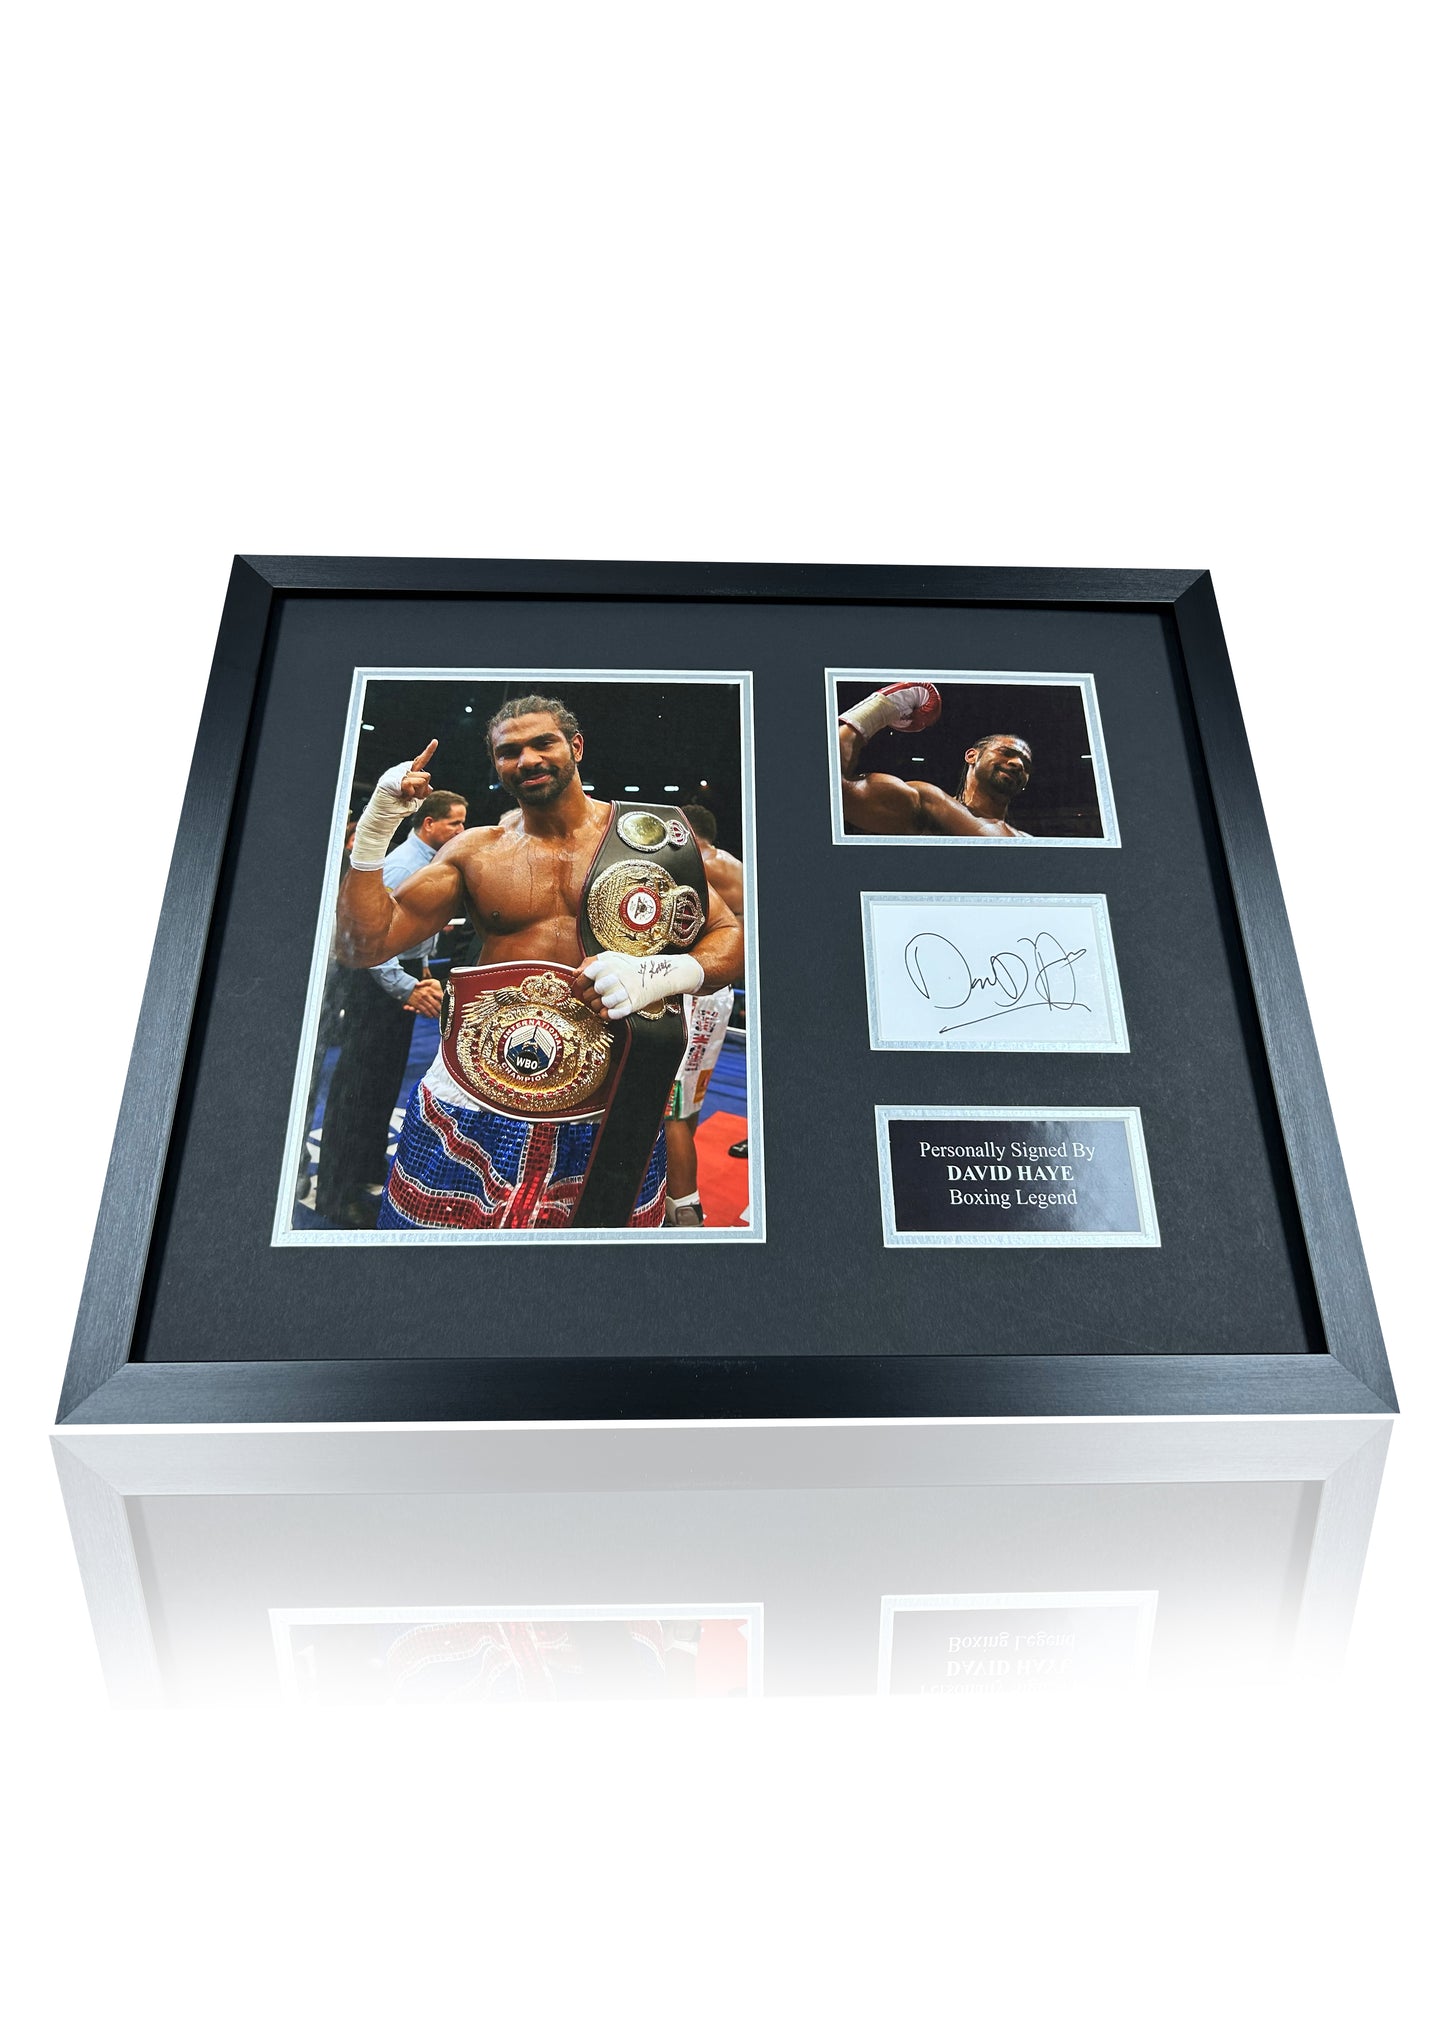 David Haye hand signed framed photo card montage boxing